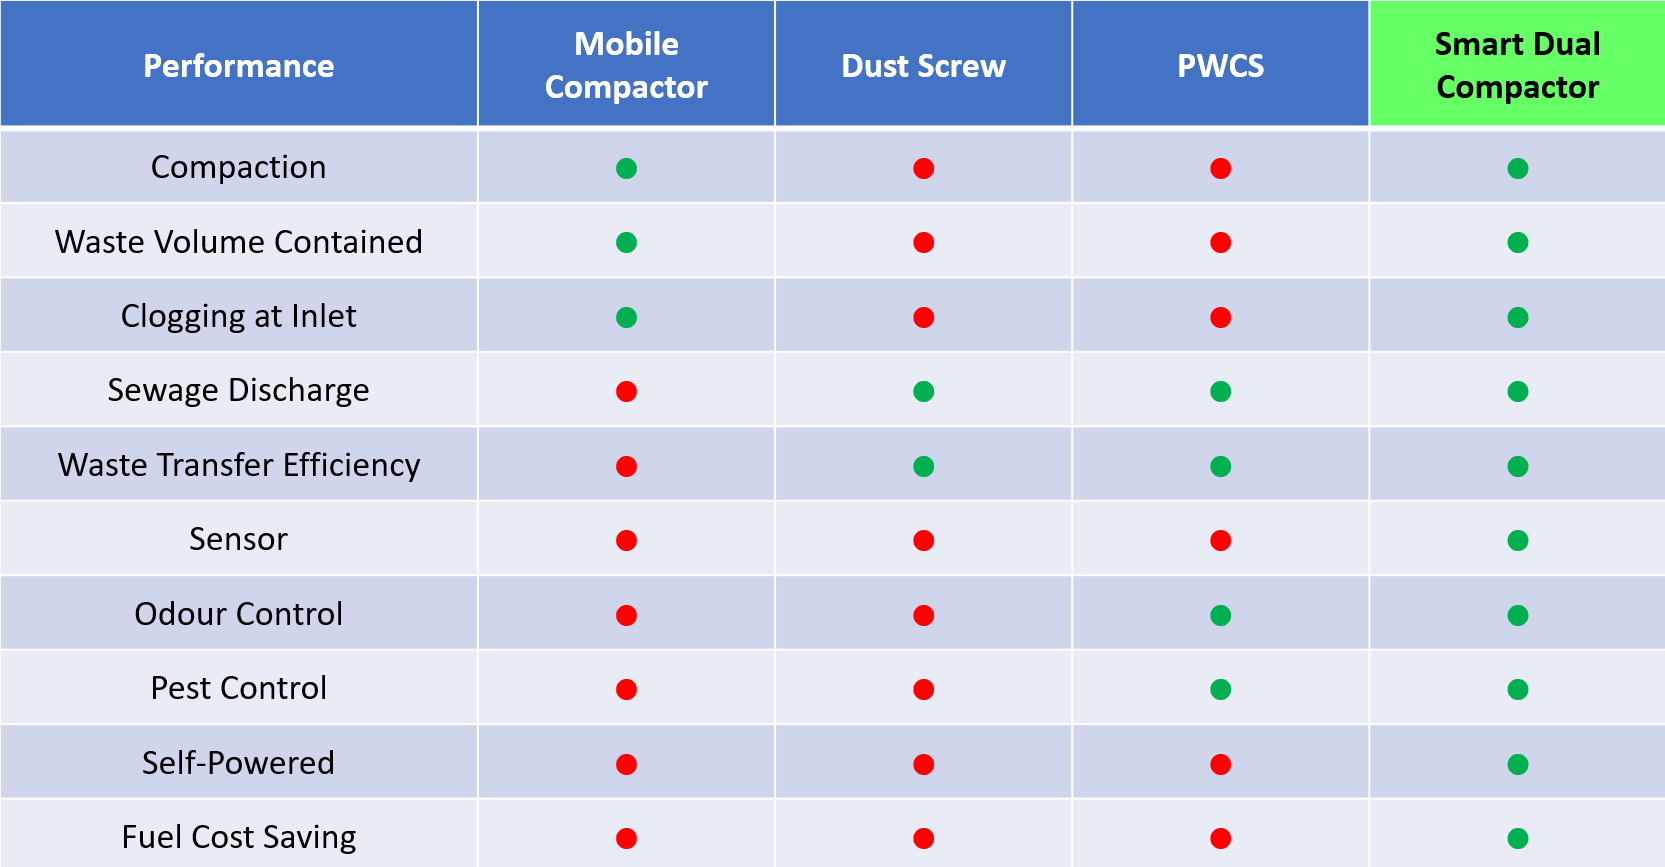 Smart Dual Compactor Mobile waste compactor dust screw comparison